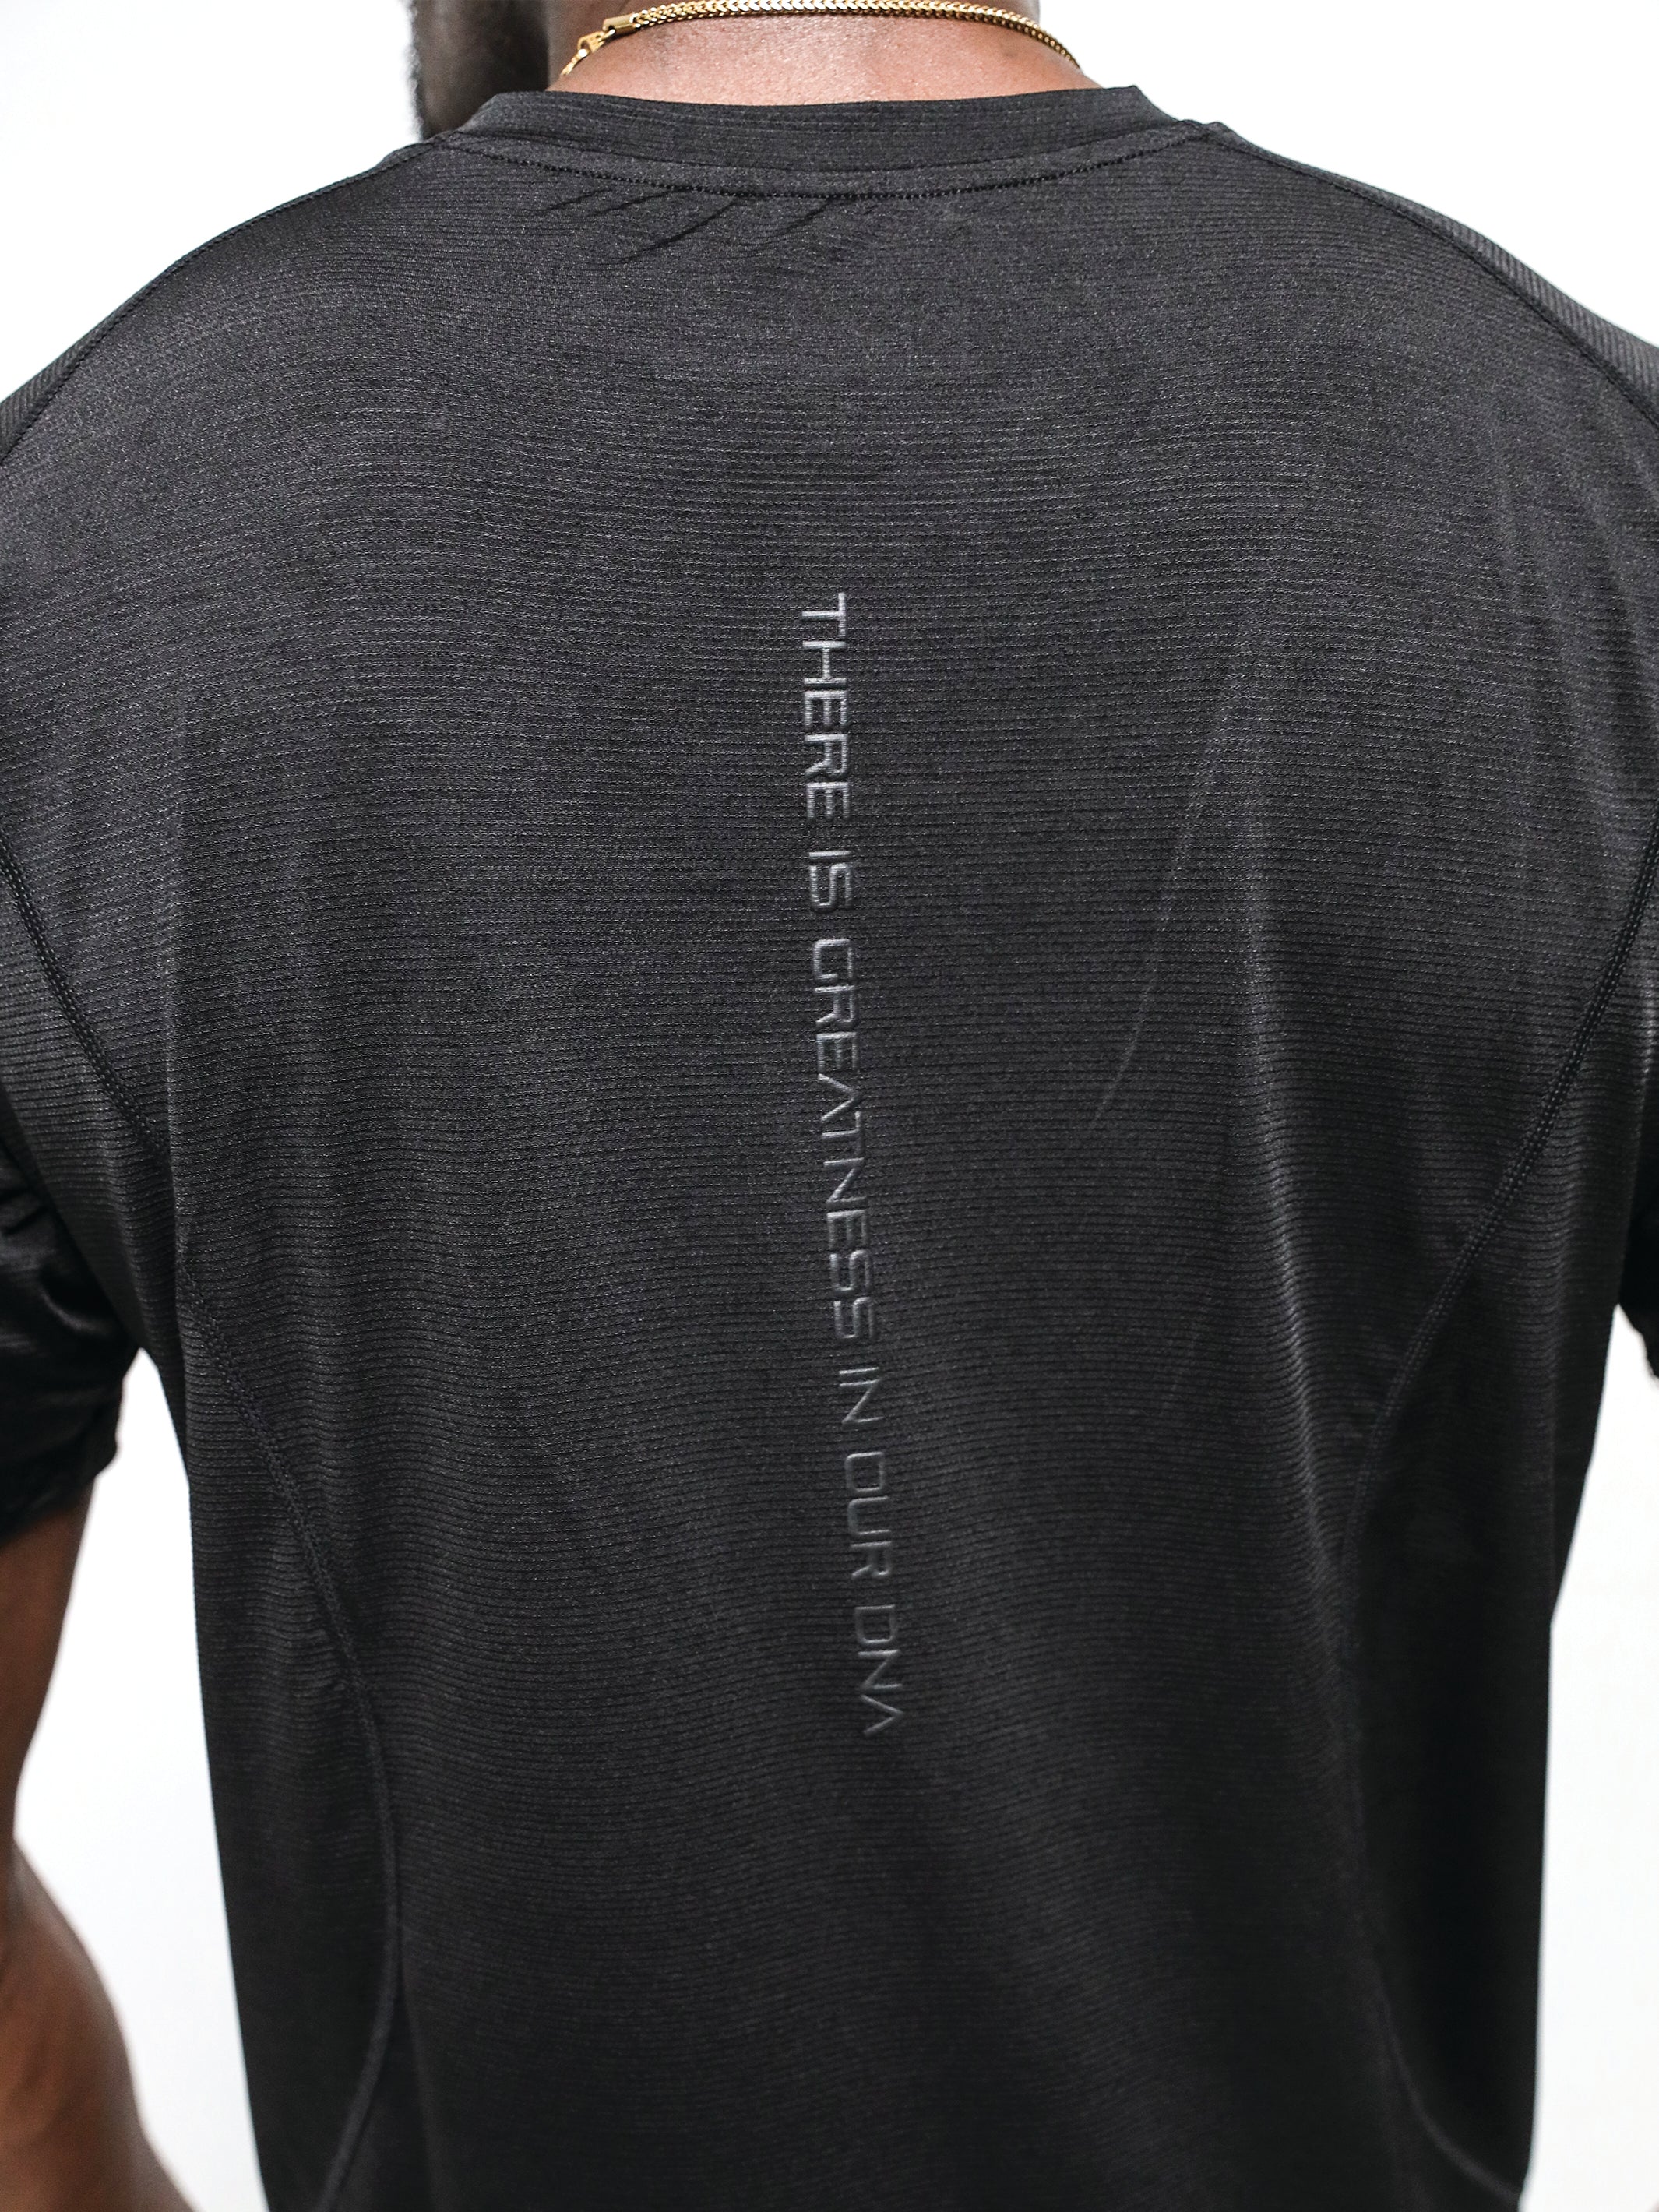 Men's Black Fist Performance Shirt